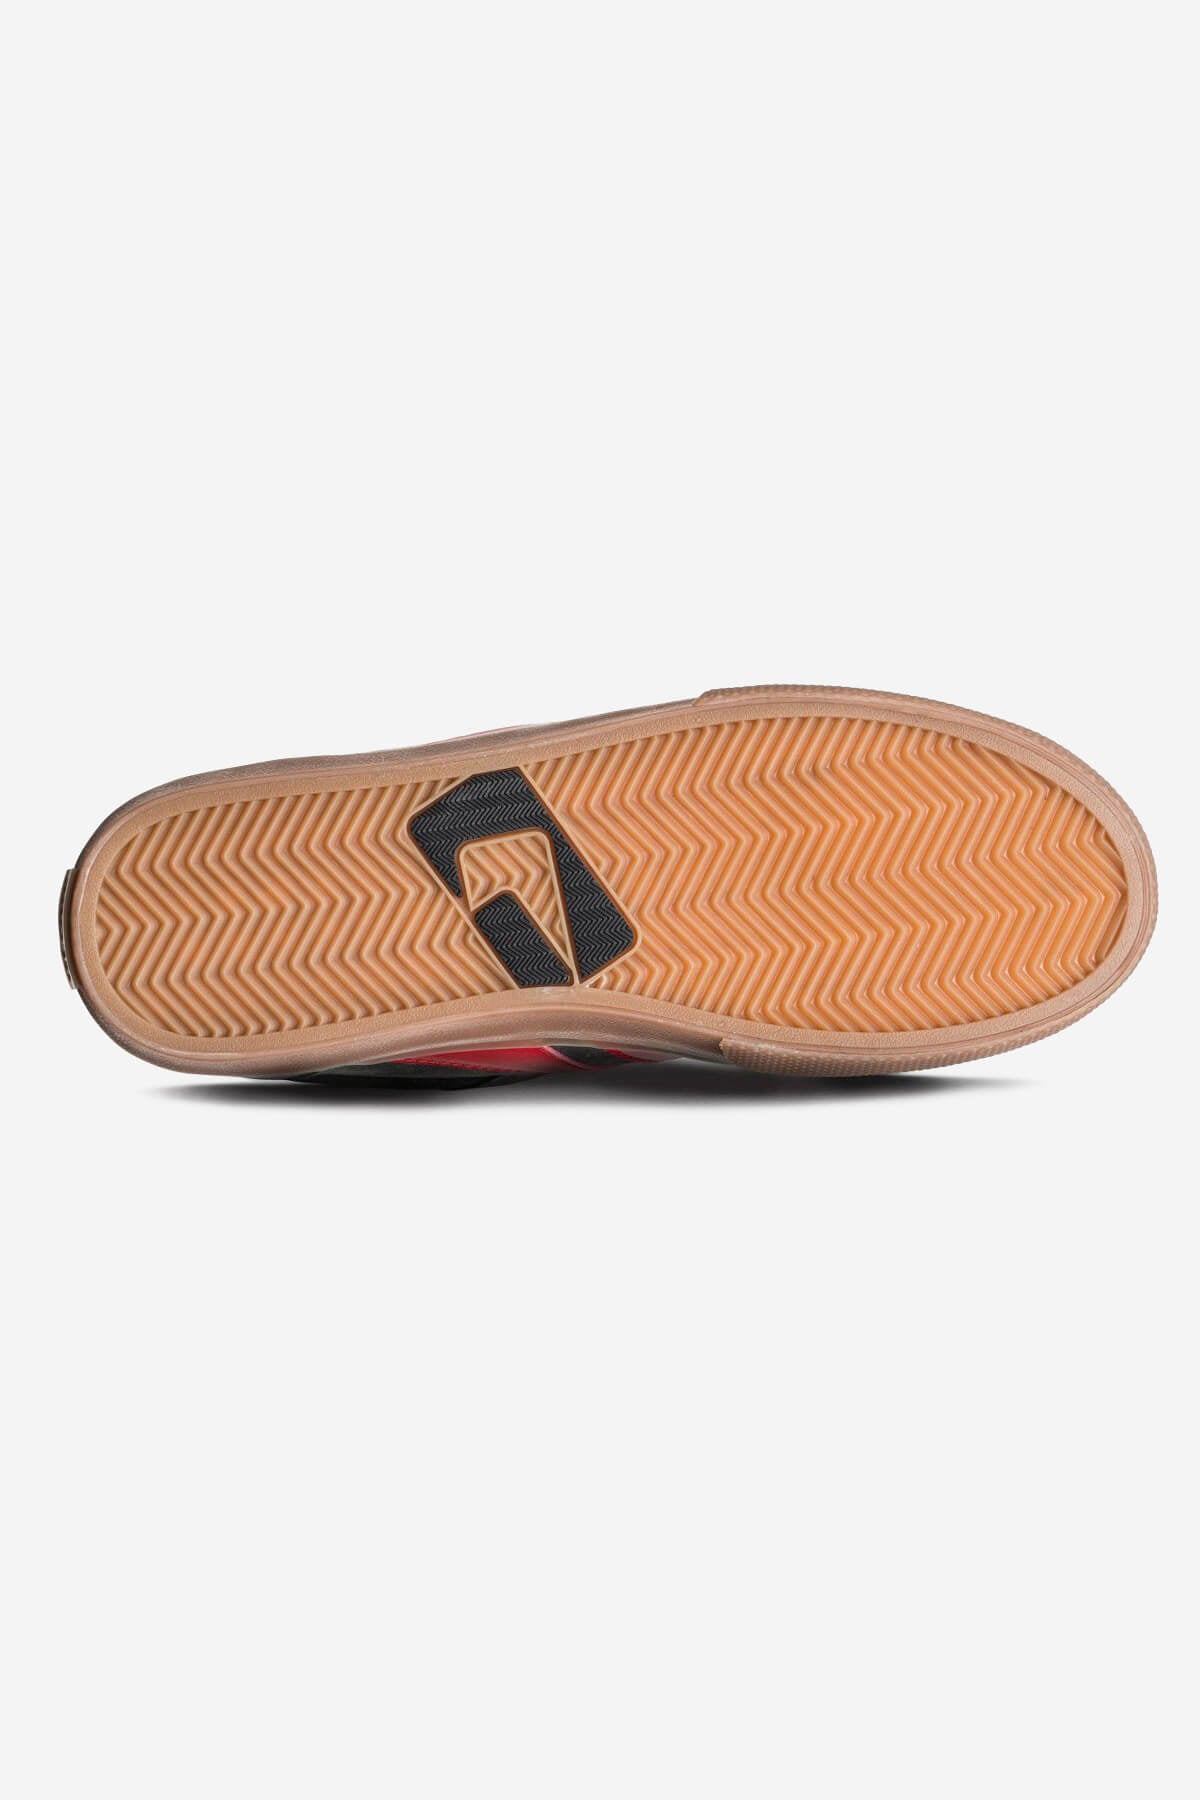 encore-2 charcoal gomma red skateboard  scarpe